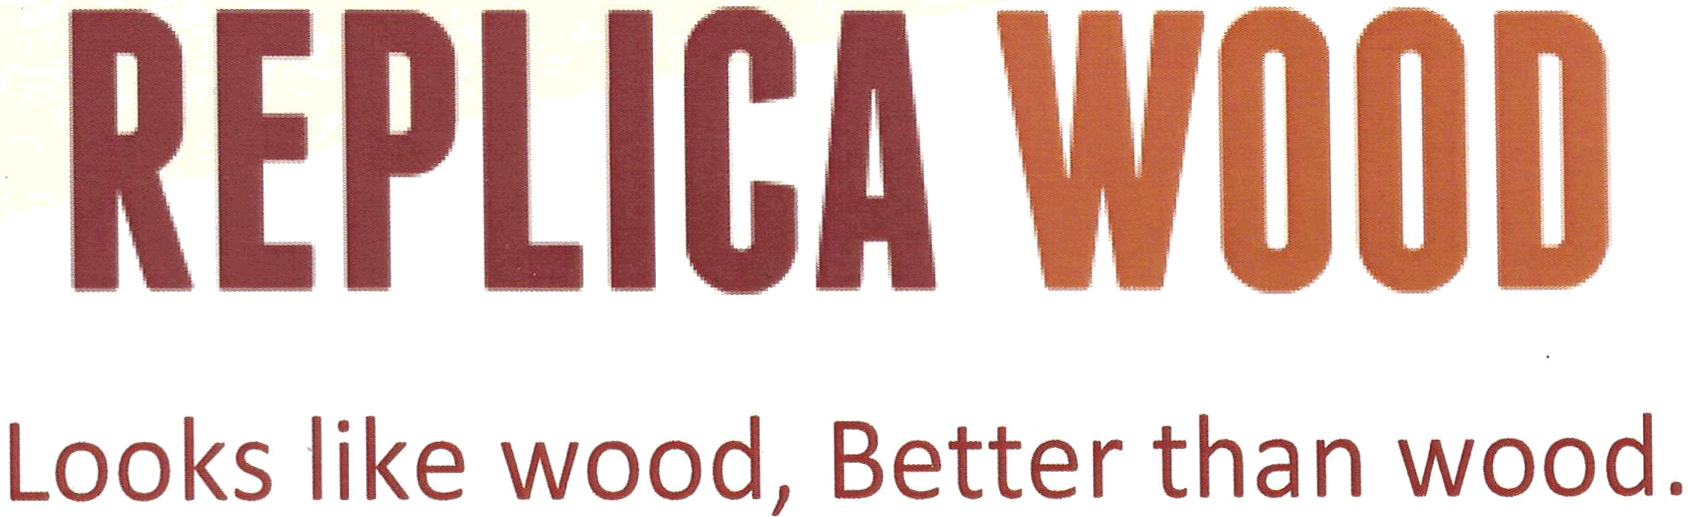 replica wood logo